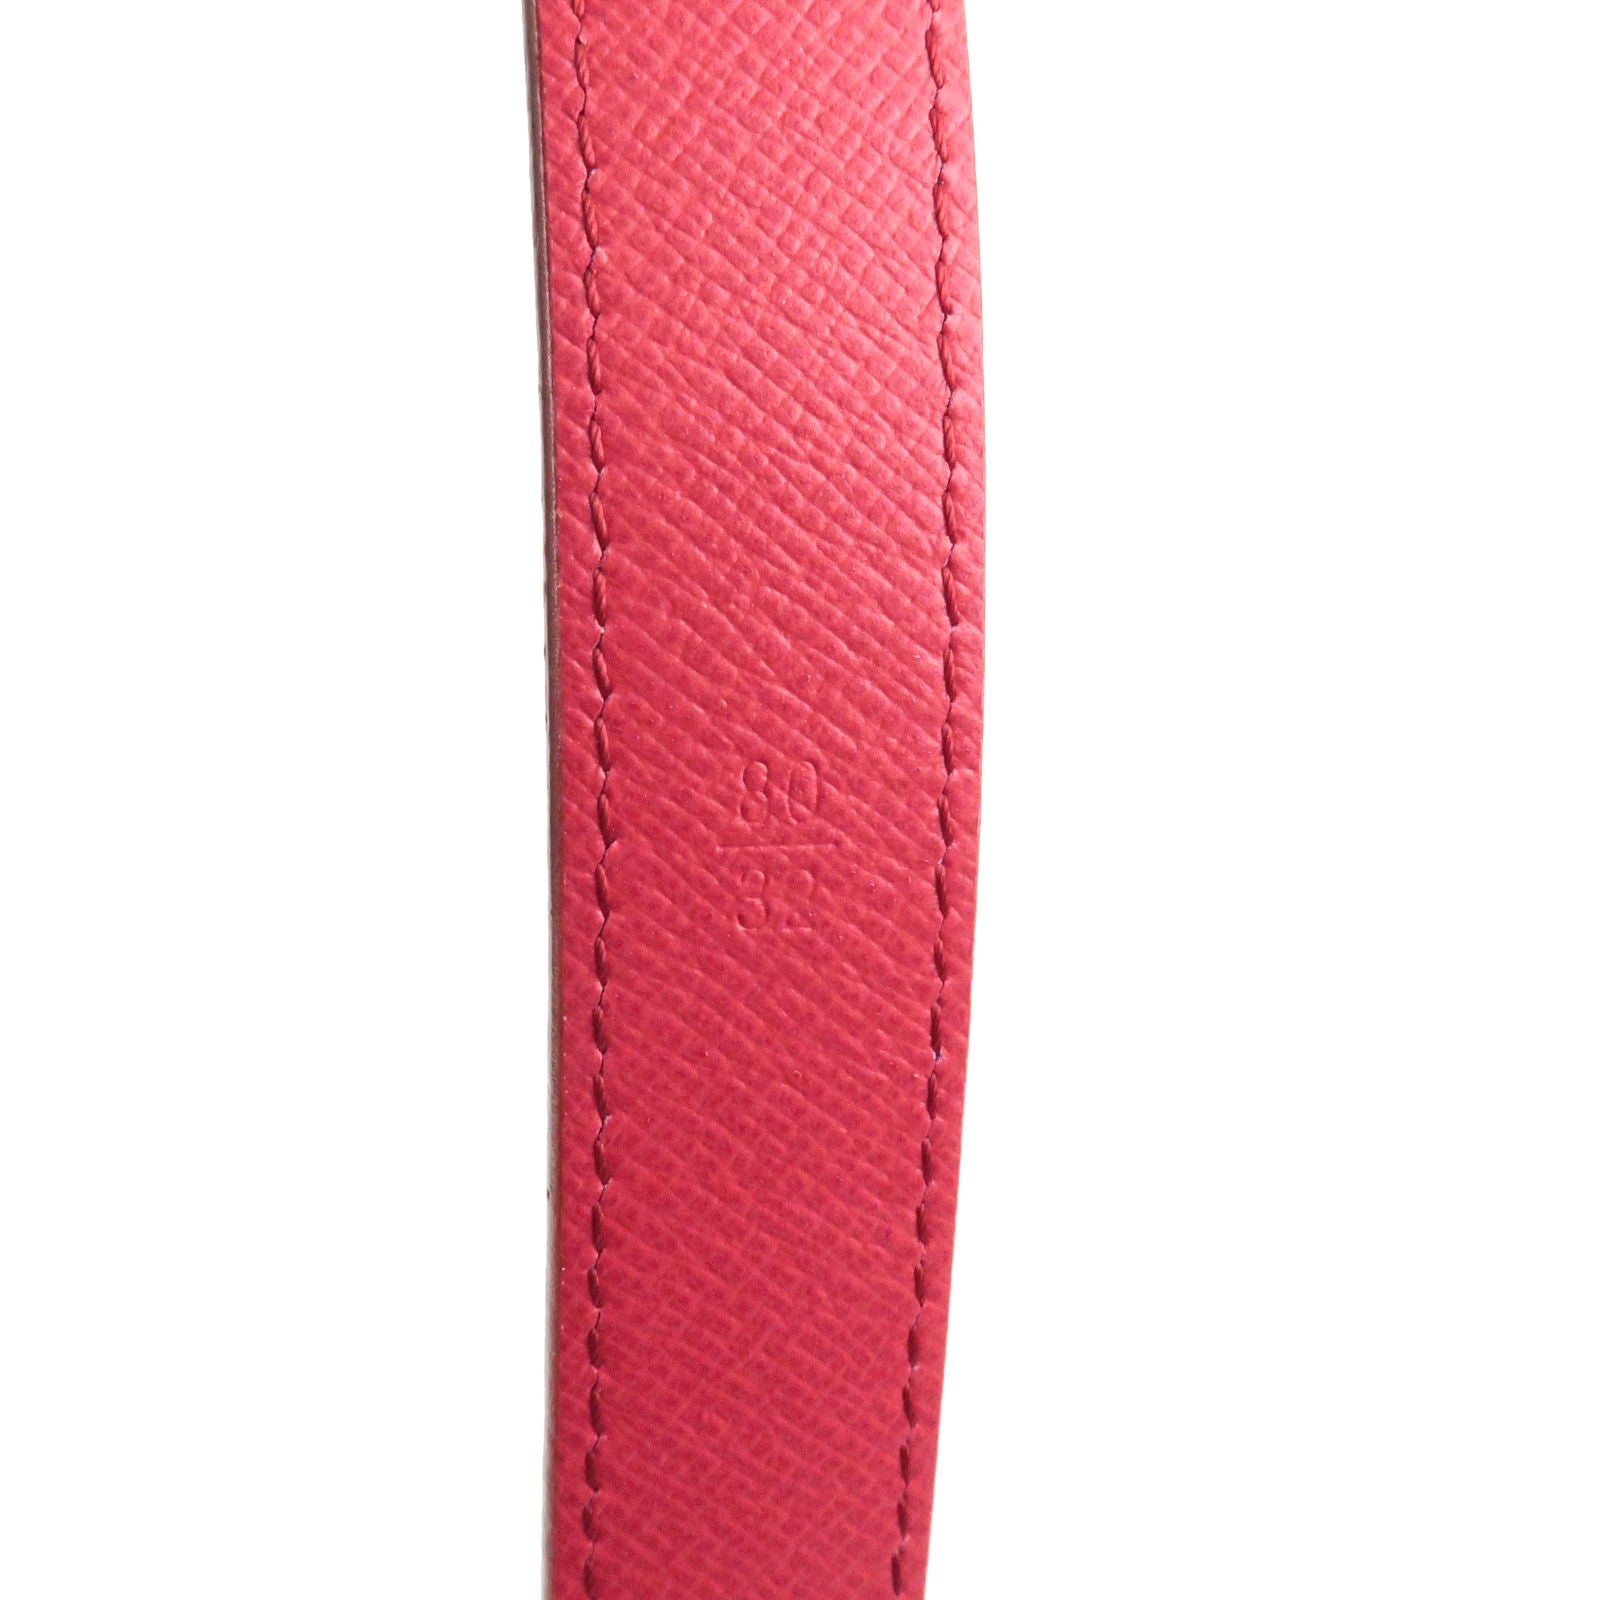 Vintage Louis Vuitton Pink Monogrammed Belt